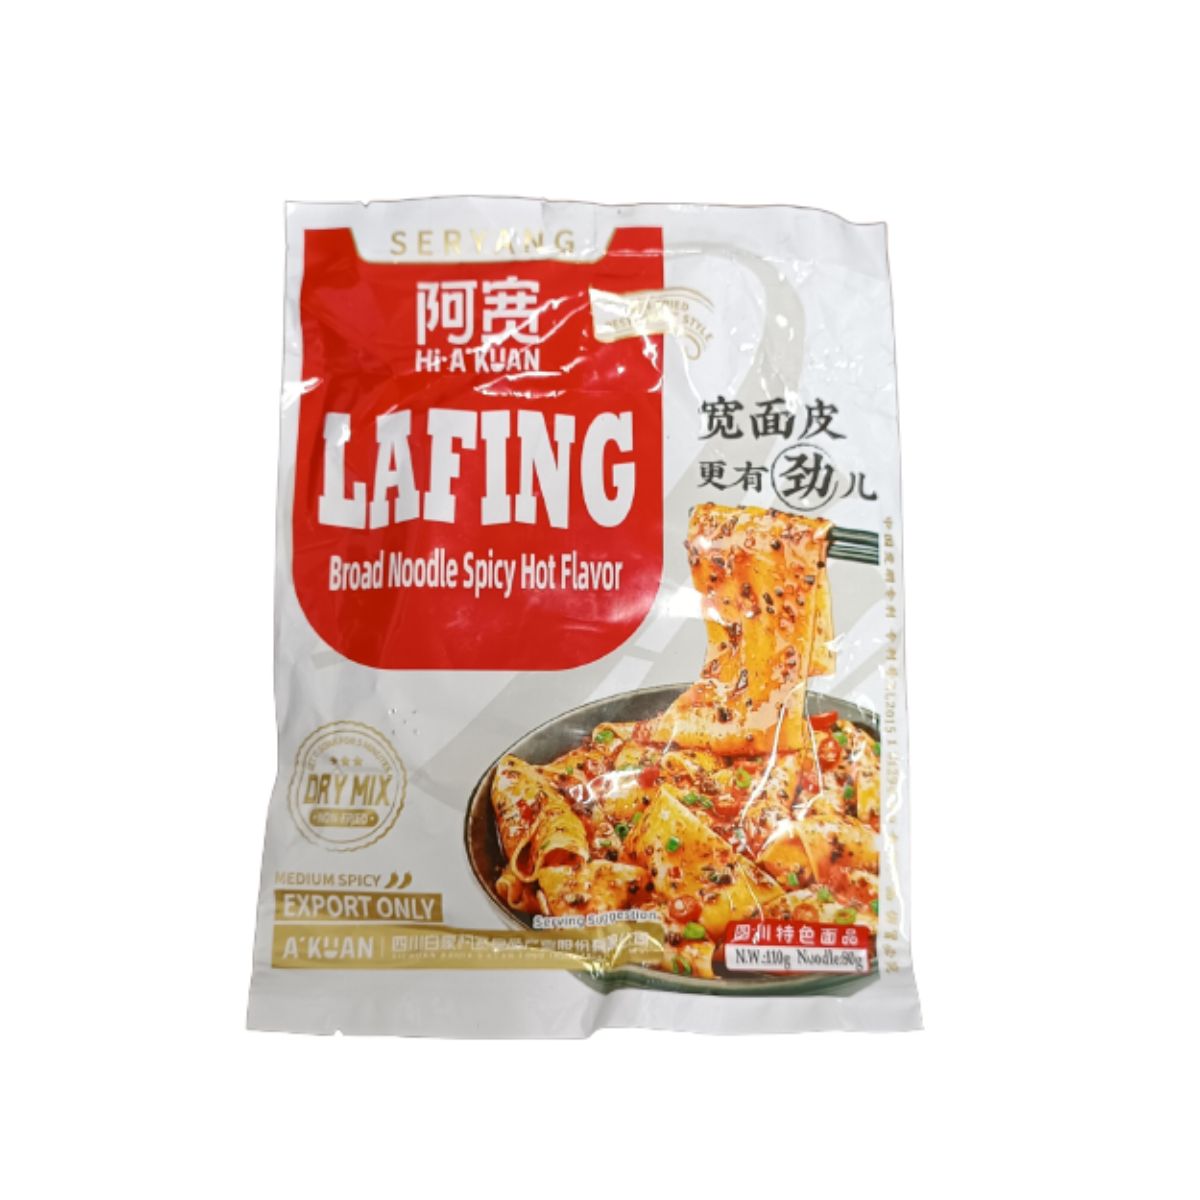 Seryang Lafing Broad Noodles Spicy Hot Flavor - 110g